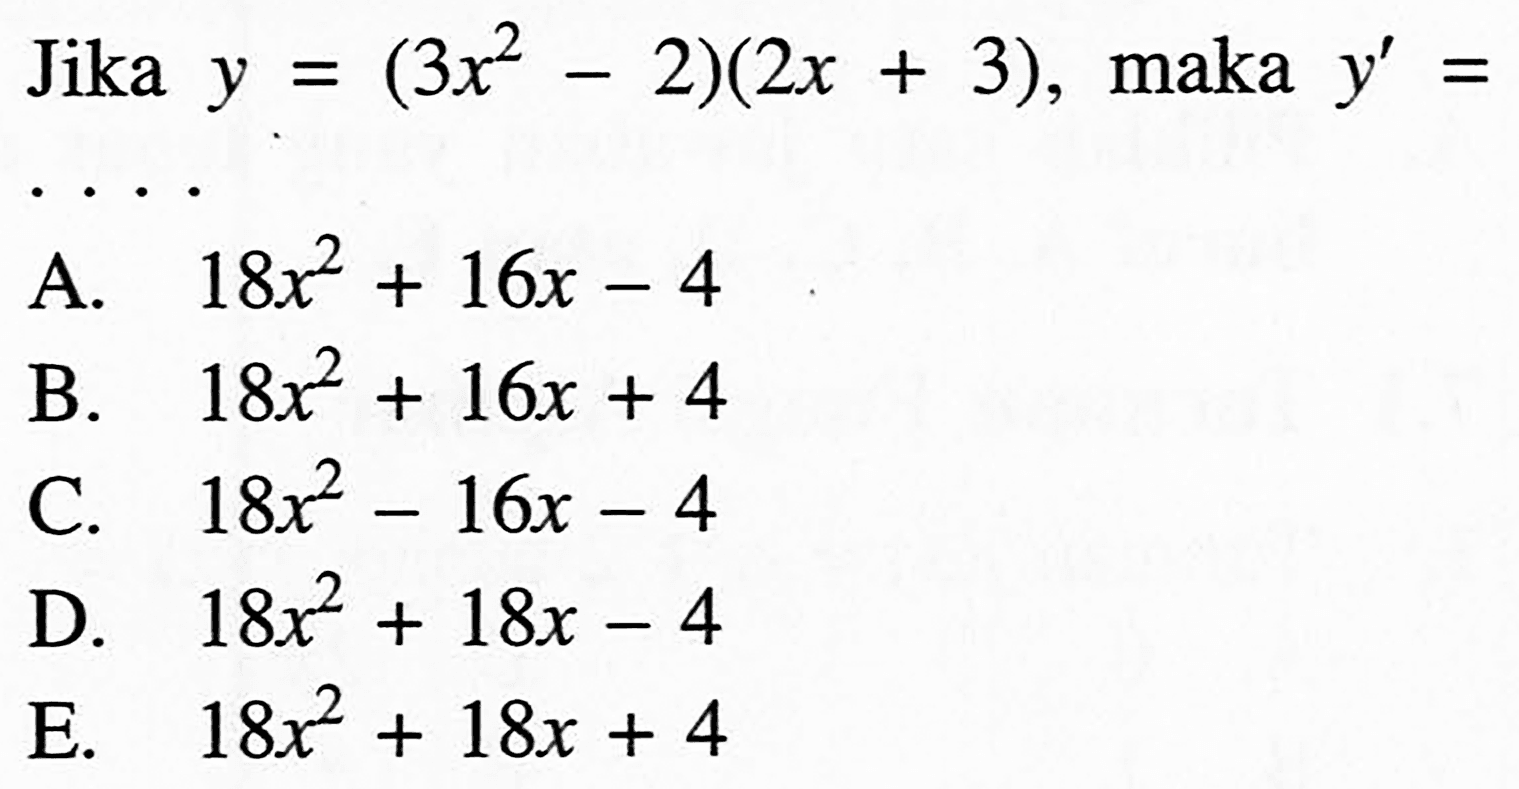 Jika y=(3x^2-2)(2x+3), maka y'= 